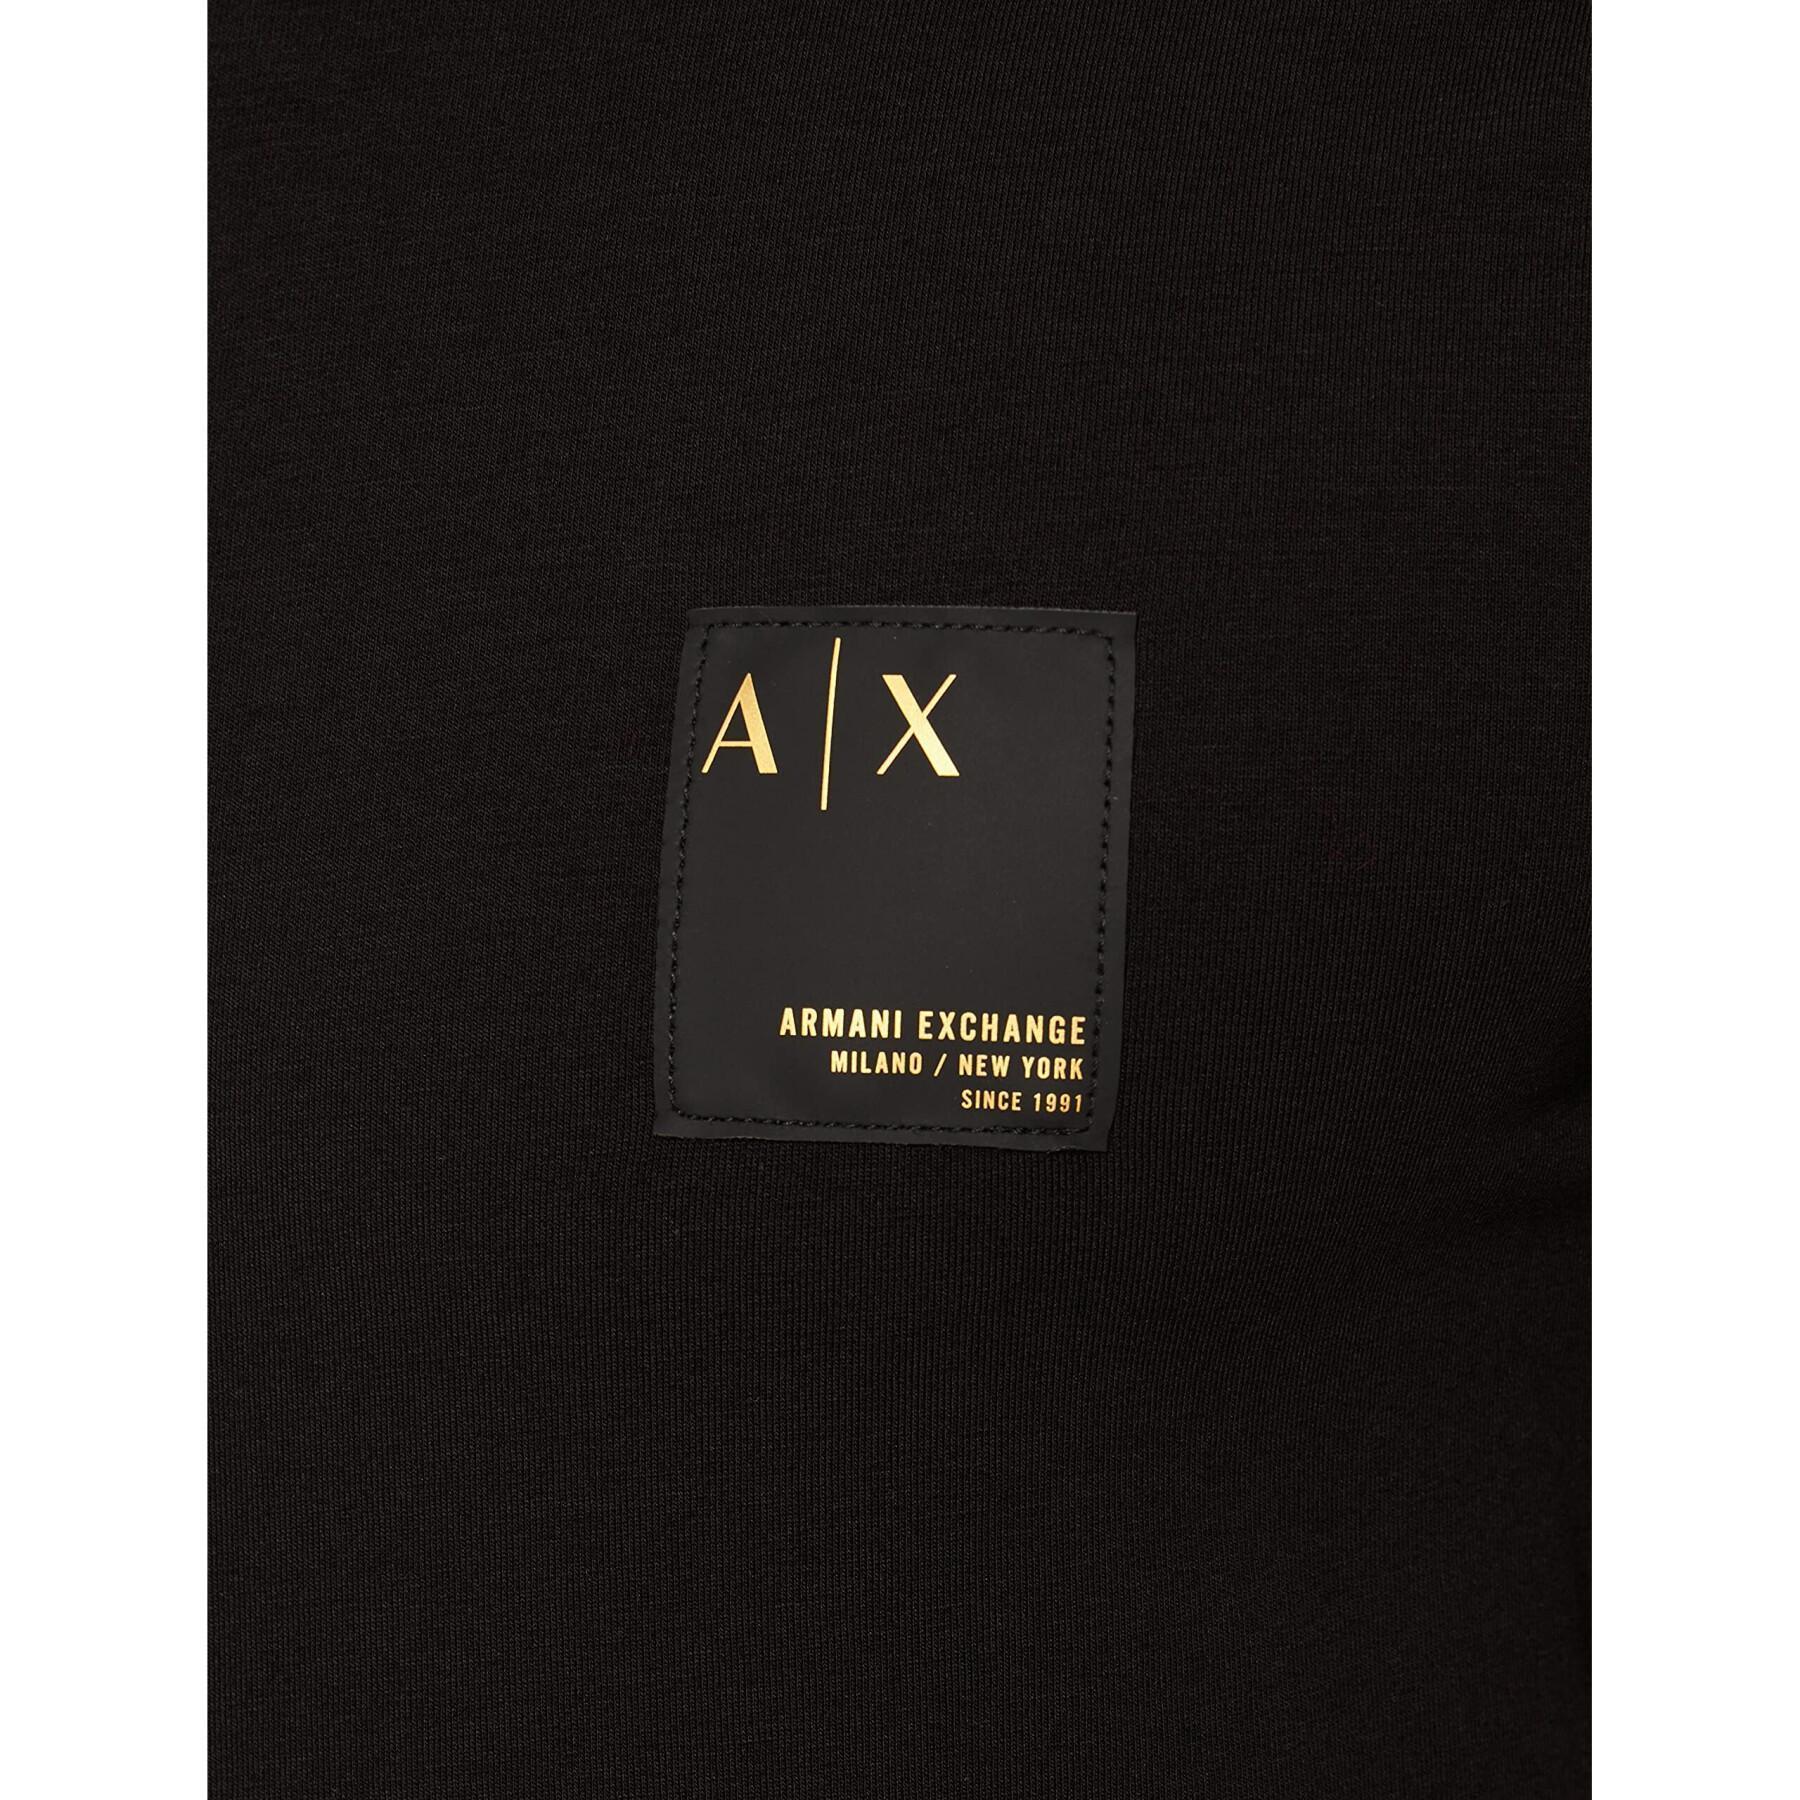 Camiseta Armani exchange 6KZTHT-ZJE6Z negro